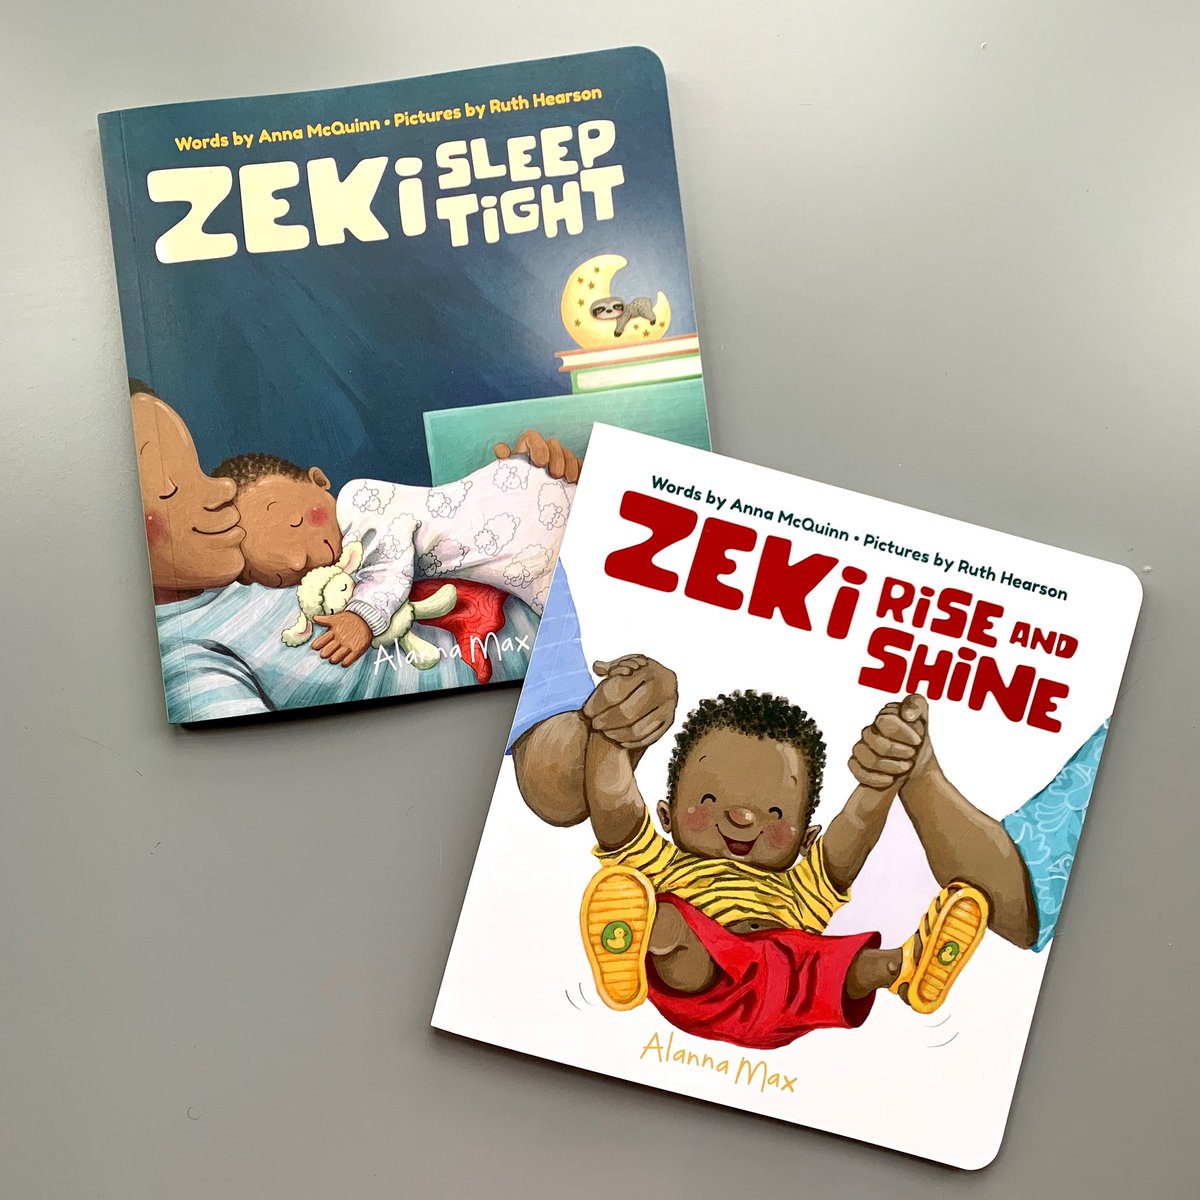 Zeki rise and shine_Zeki sleep tight (covers)